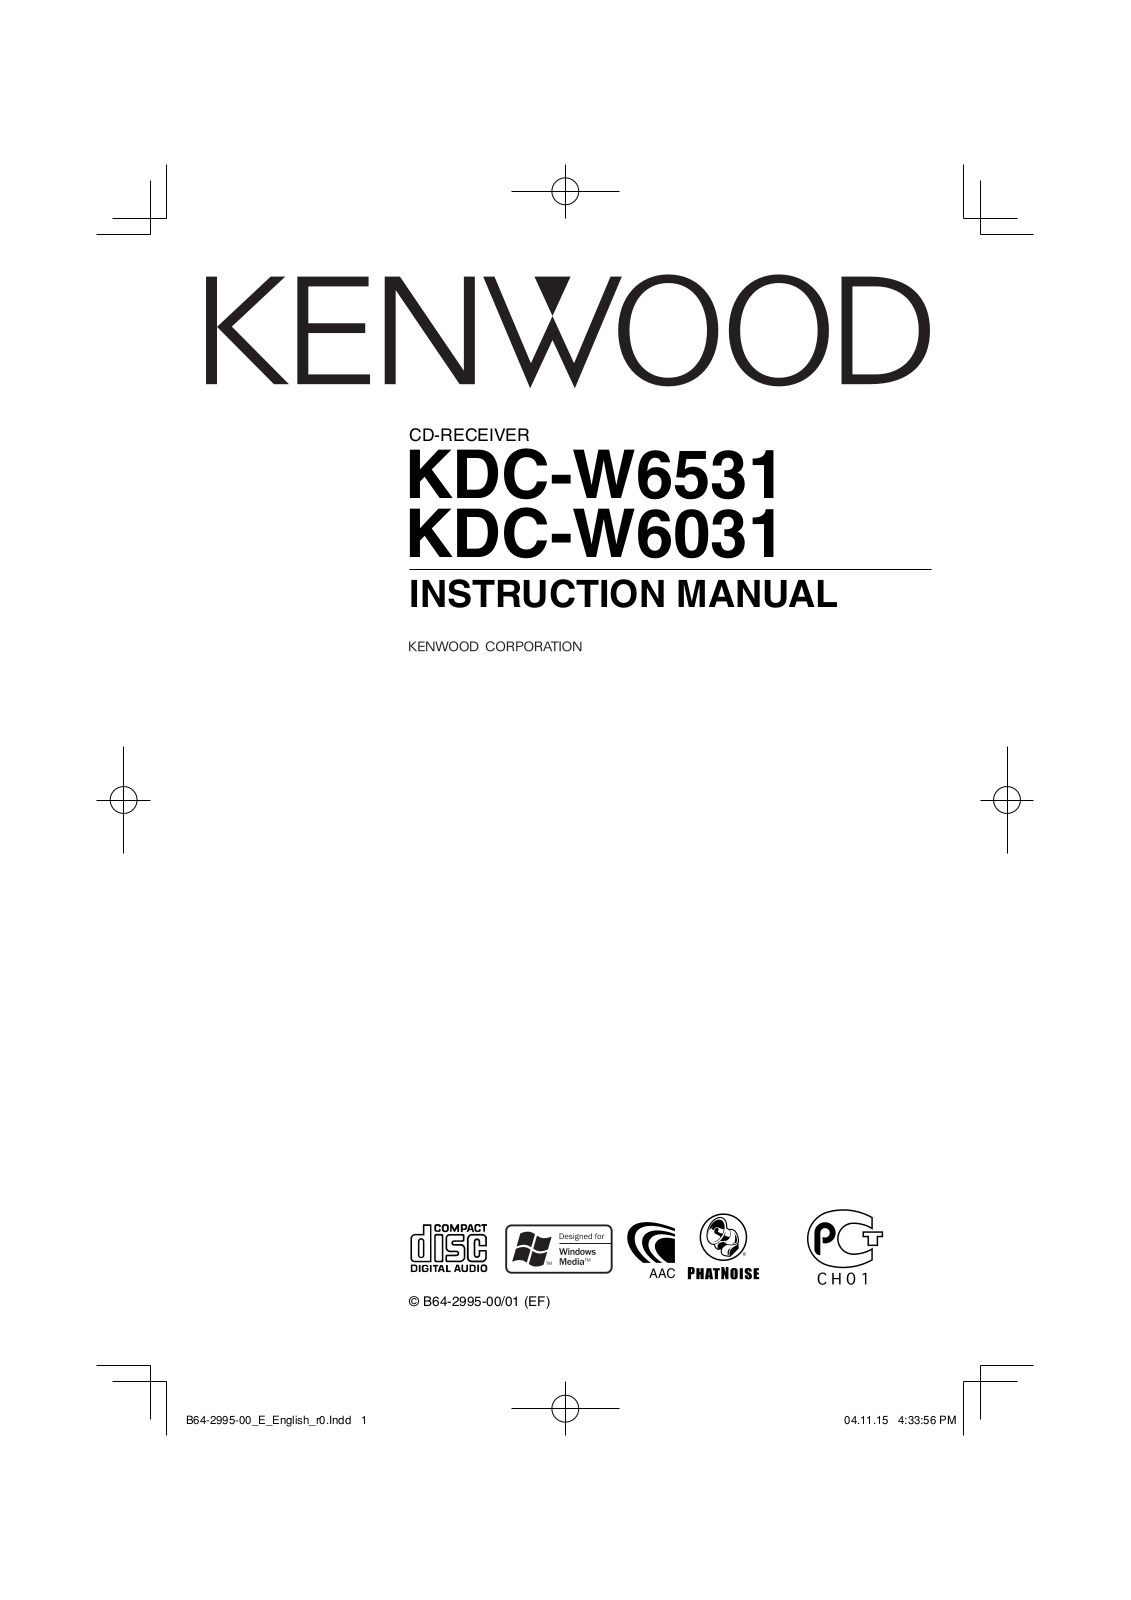 Kenwood KDC-W6031, KDC-W6531 User Manual